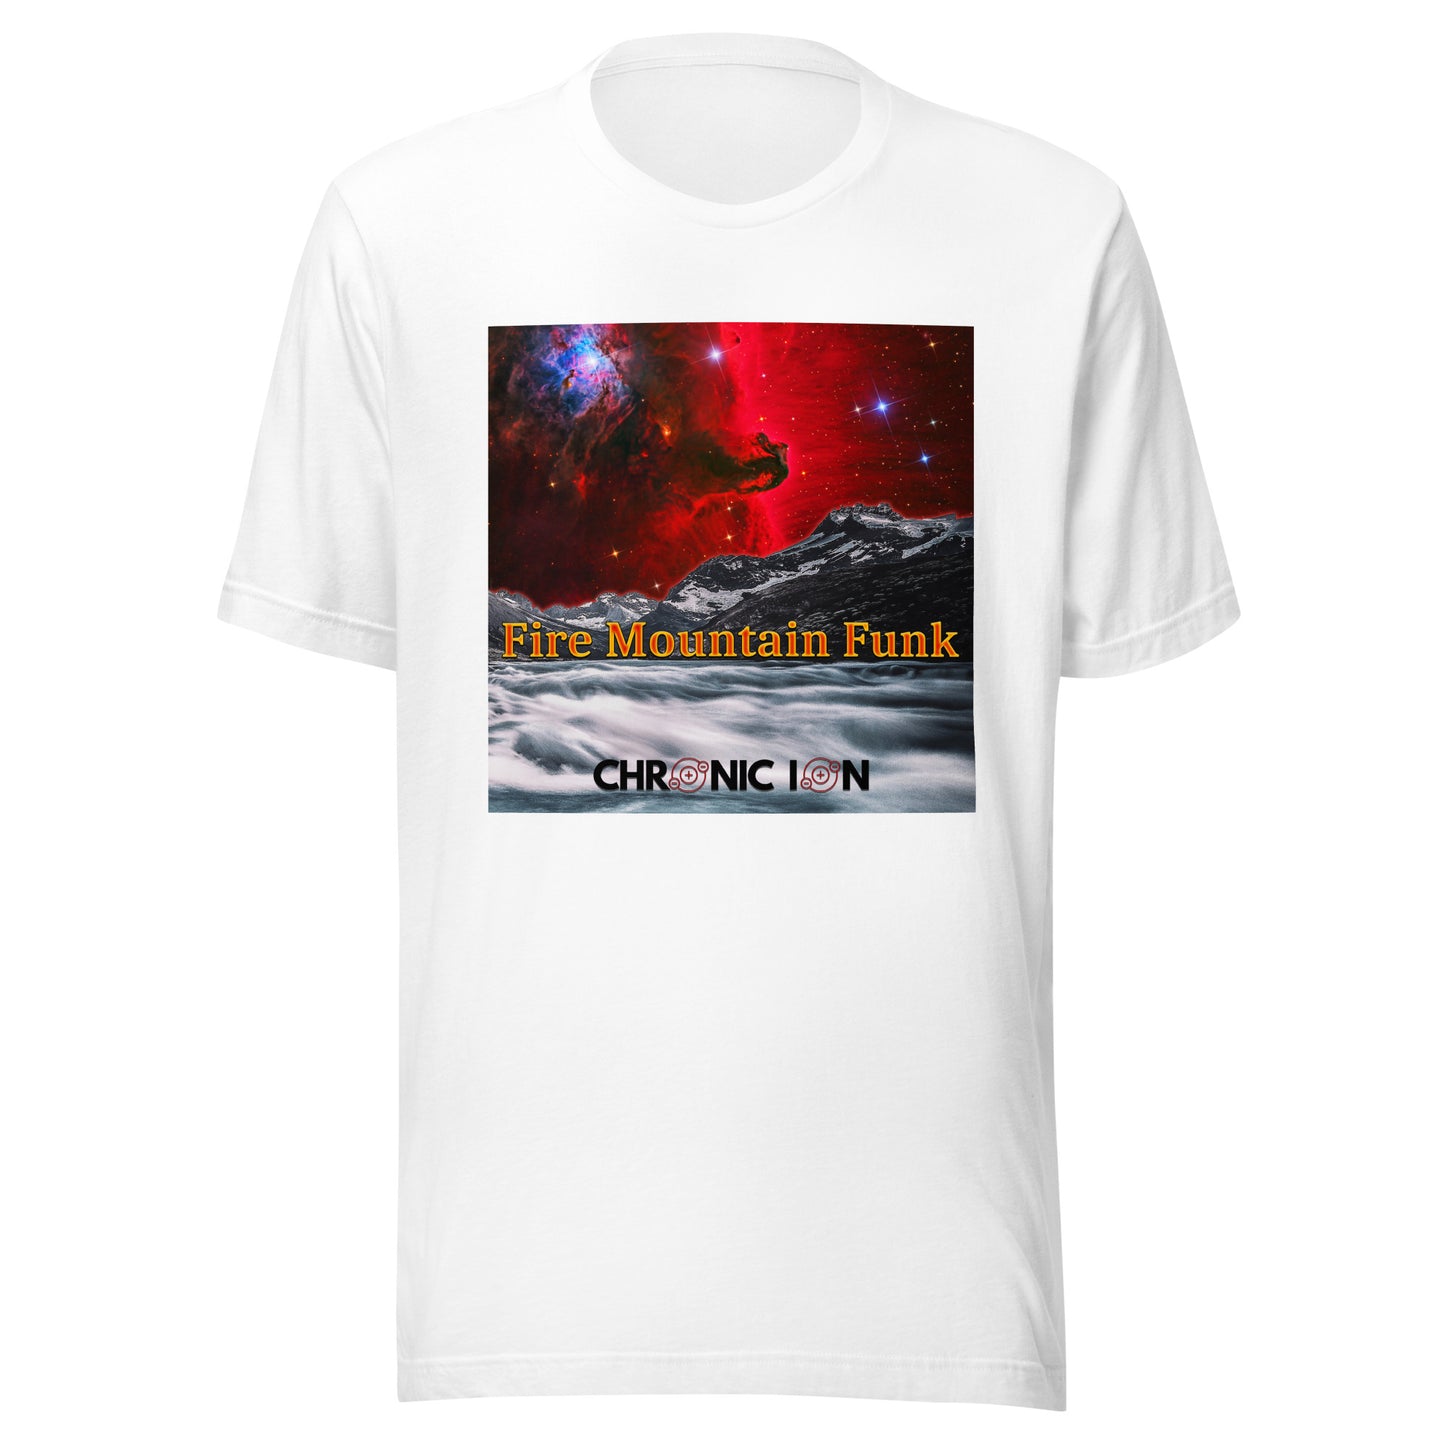 Chronic Ion - Fire Mountain Funk T-Shirt